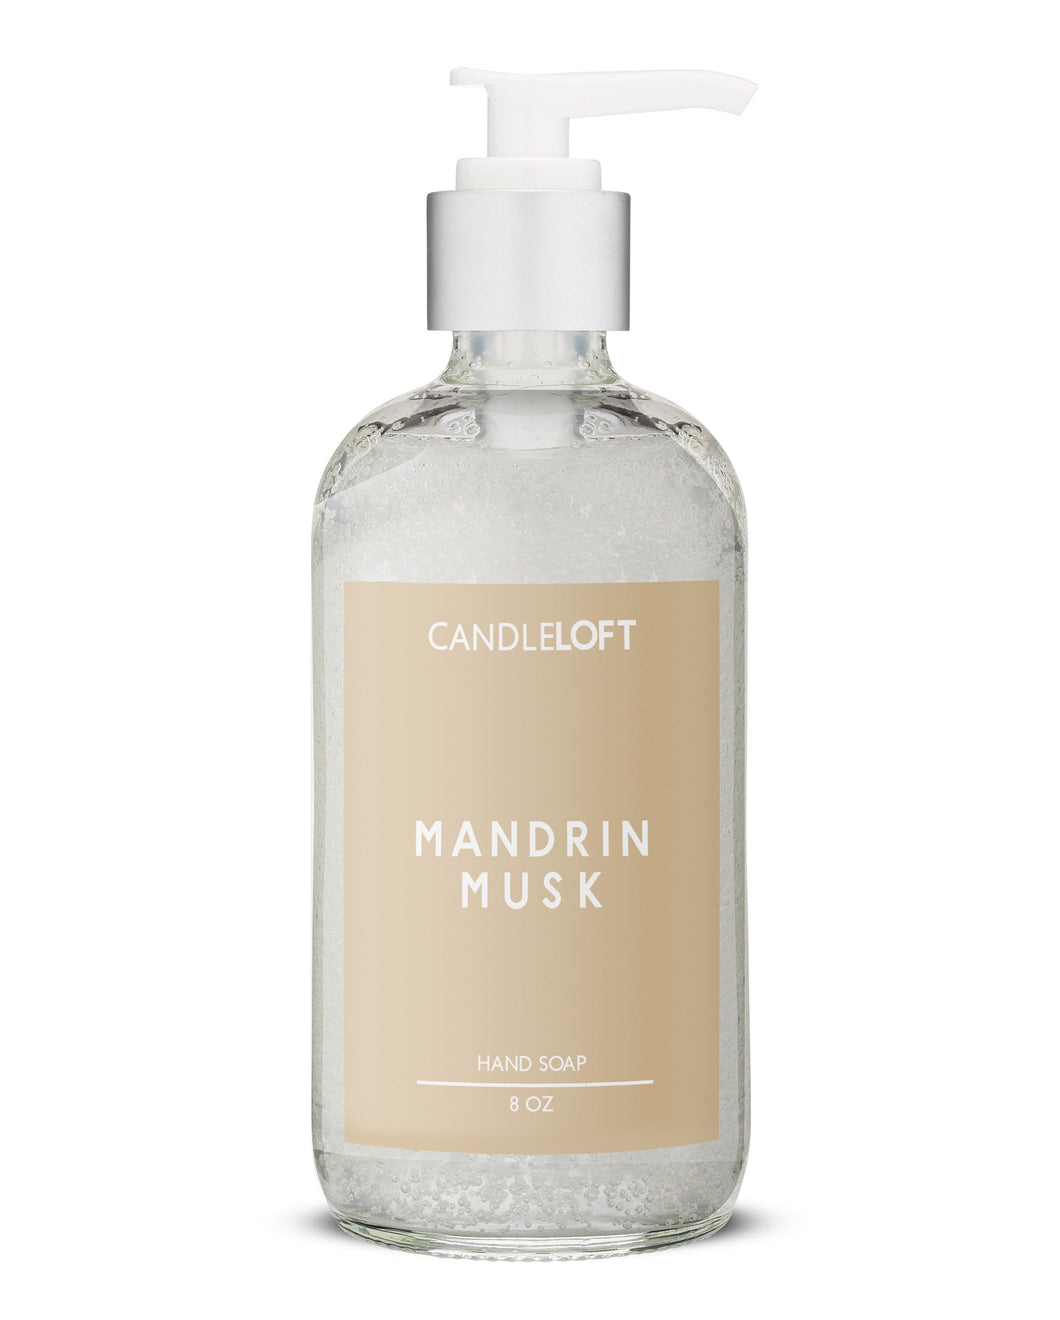 The Candle Loft Hand Soap Mandarin Musk Hand Soap